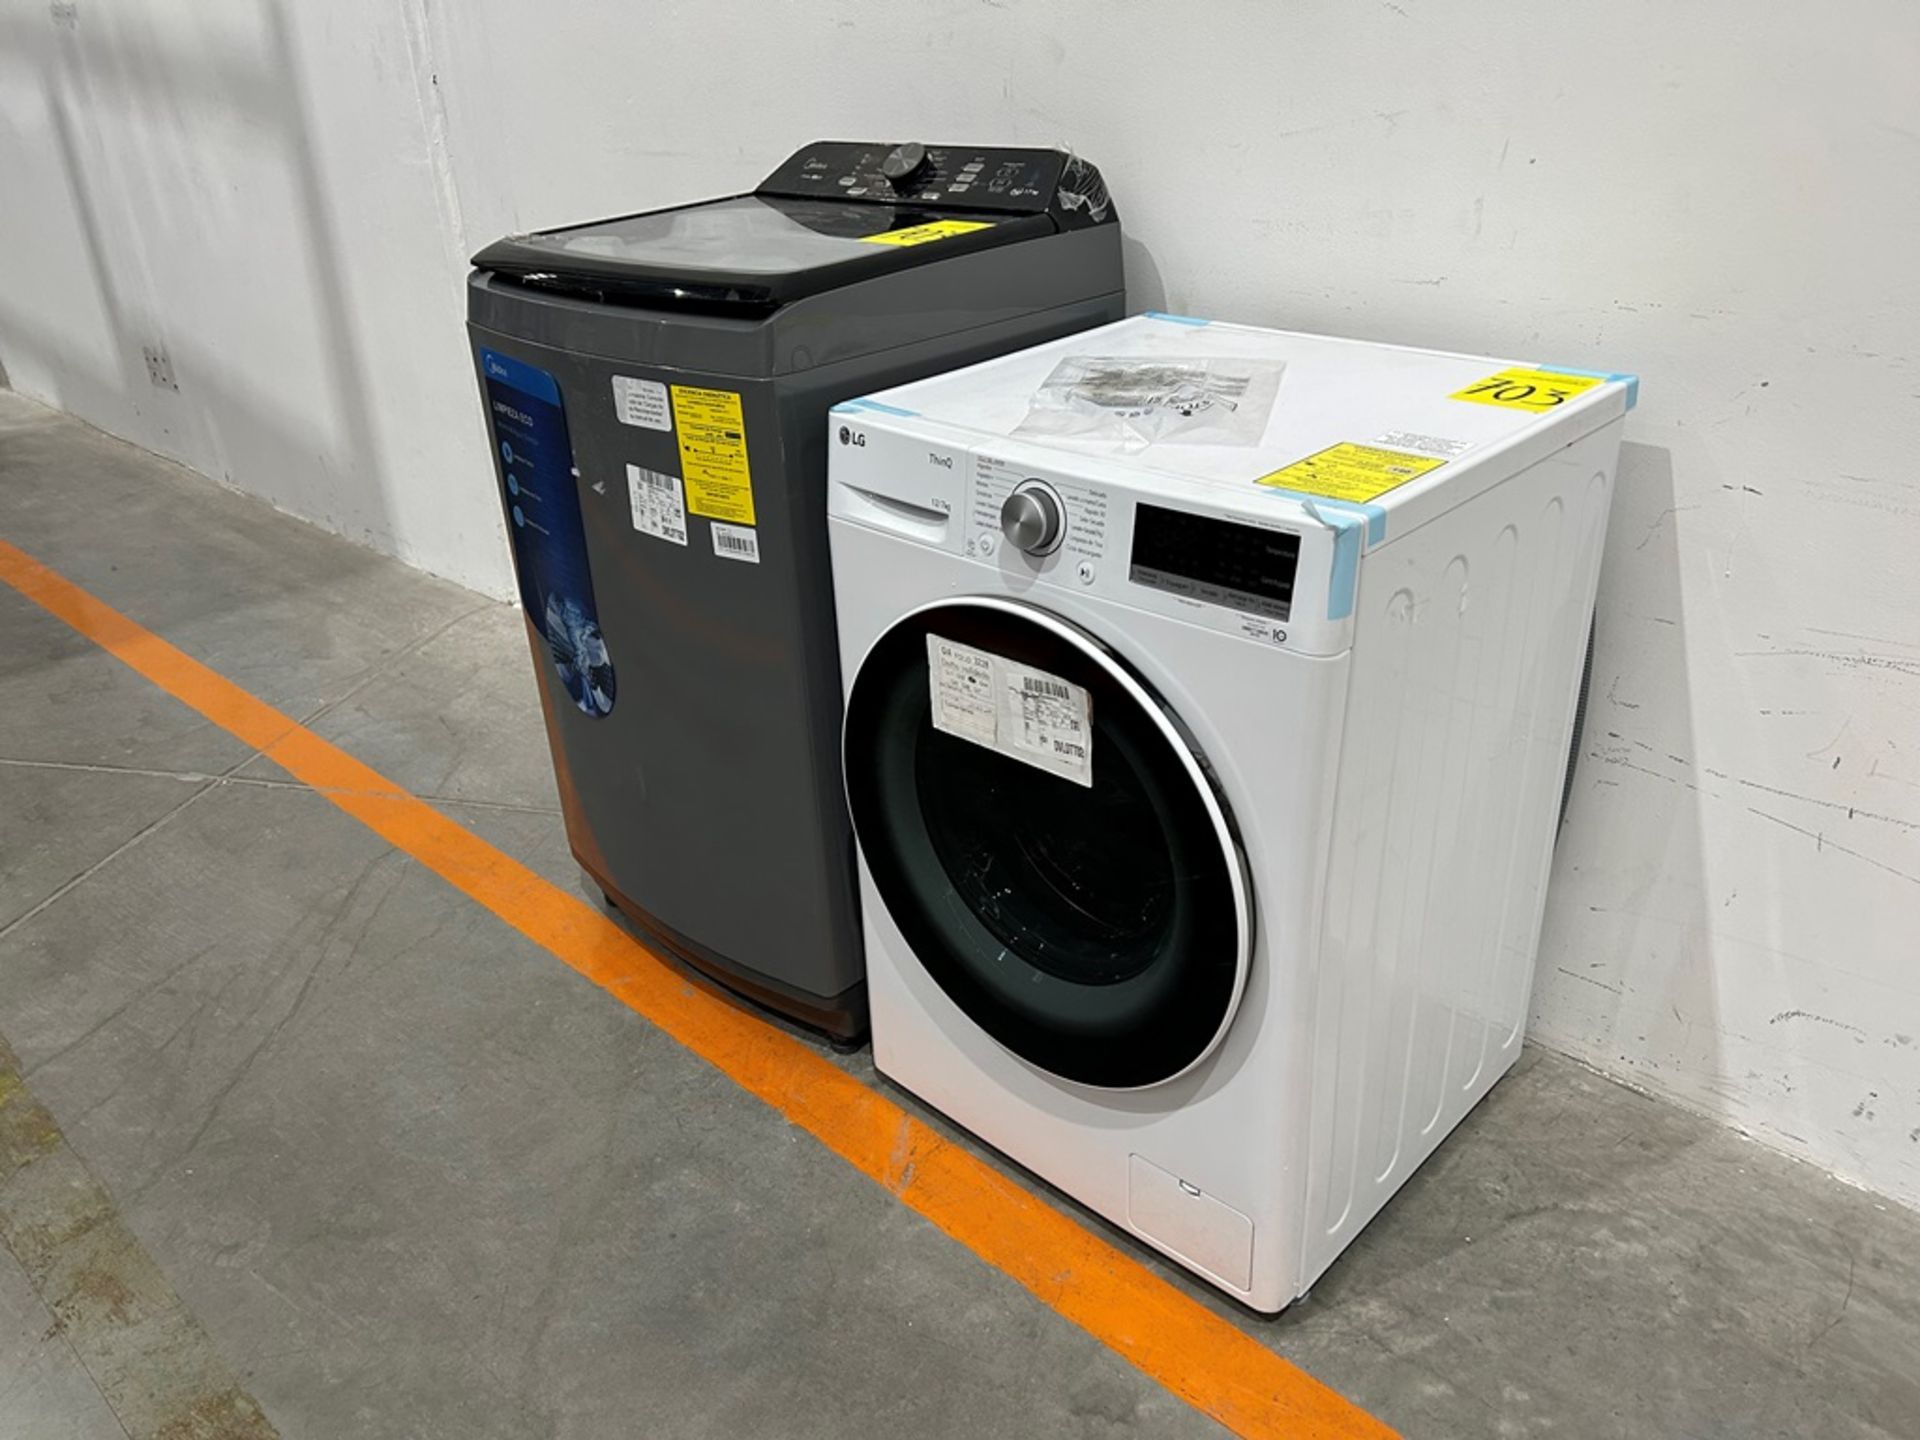 Lote de 2 lavadoras contiene: 1 Lavadora de 17 KG, Marca MIDEA, Modelo M1920901, Serie D00534, Colo - Image 2 of 10